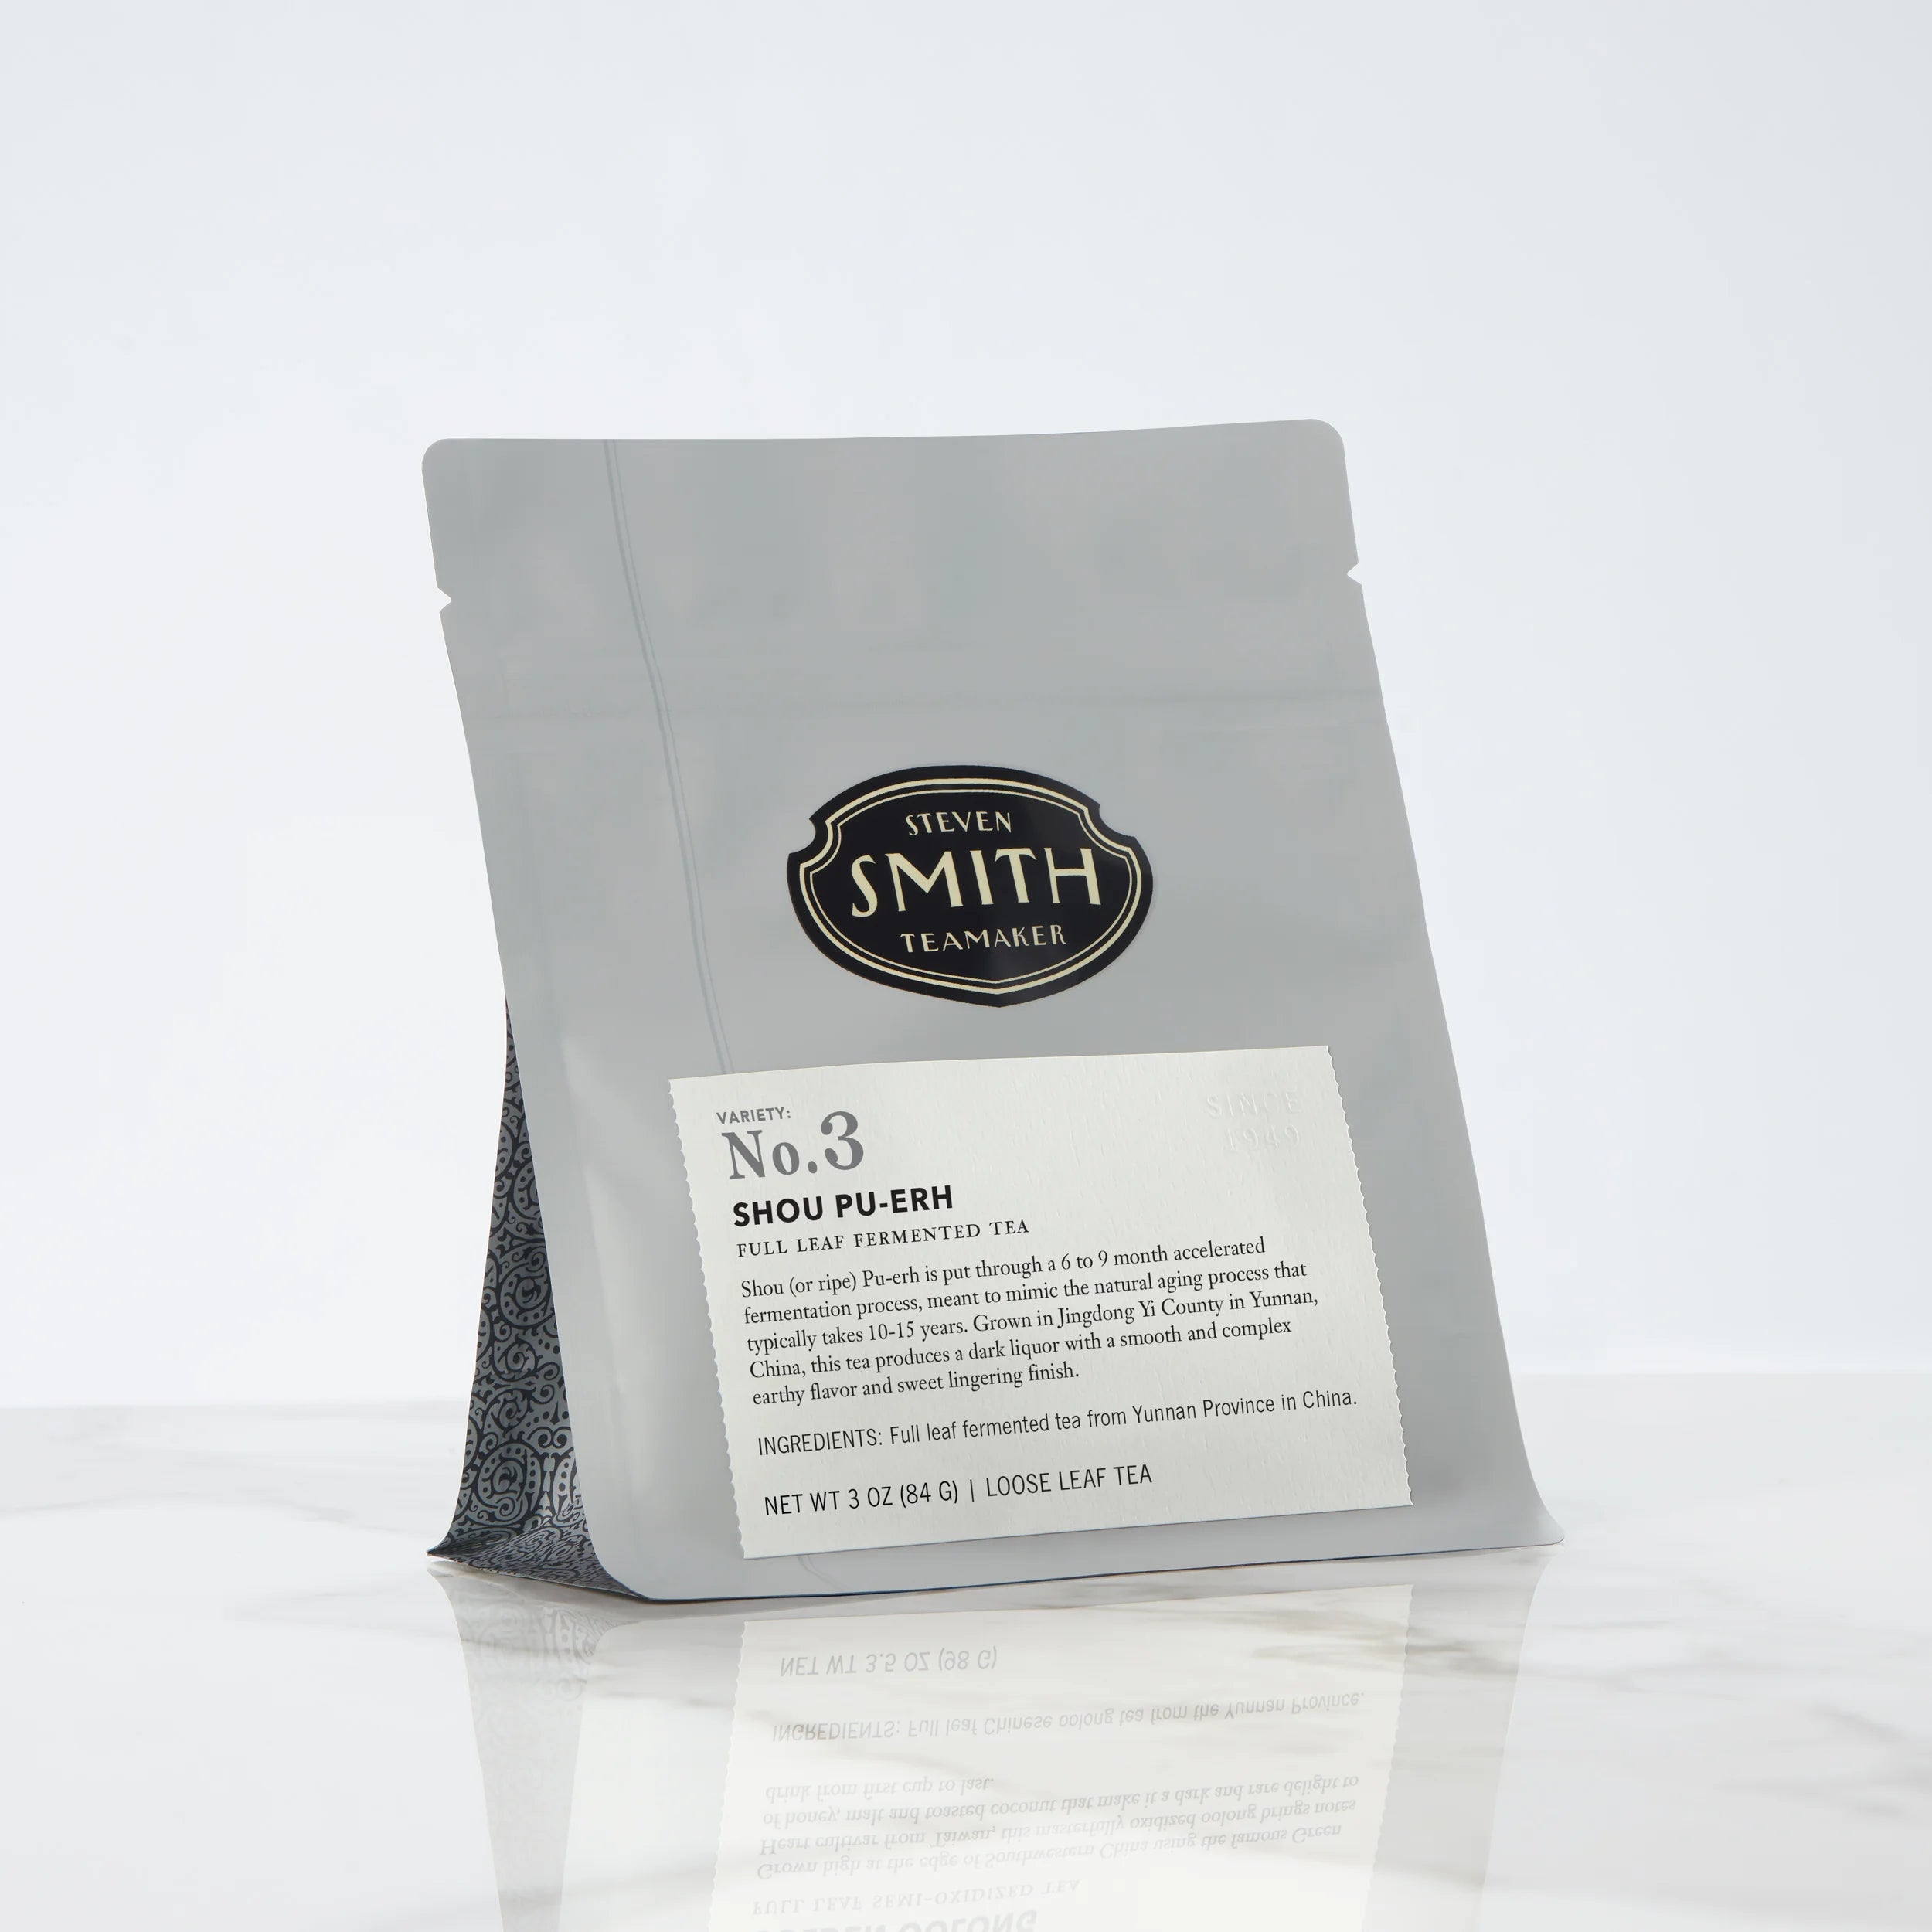 Gray bag of loose leaf tea with Smith shield and Shou Pu-erh label